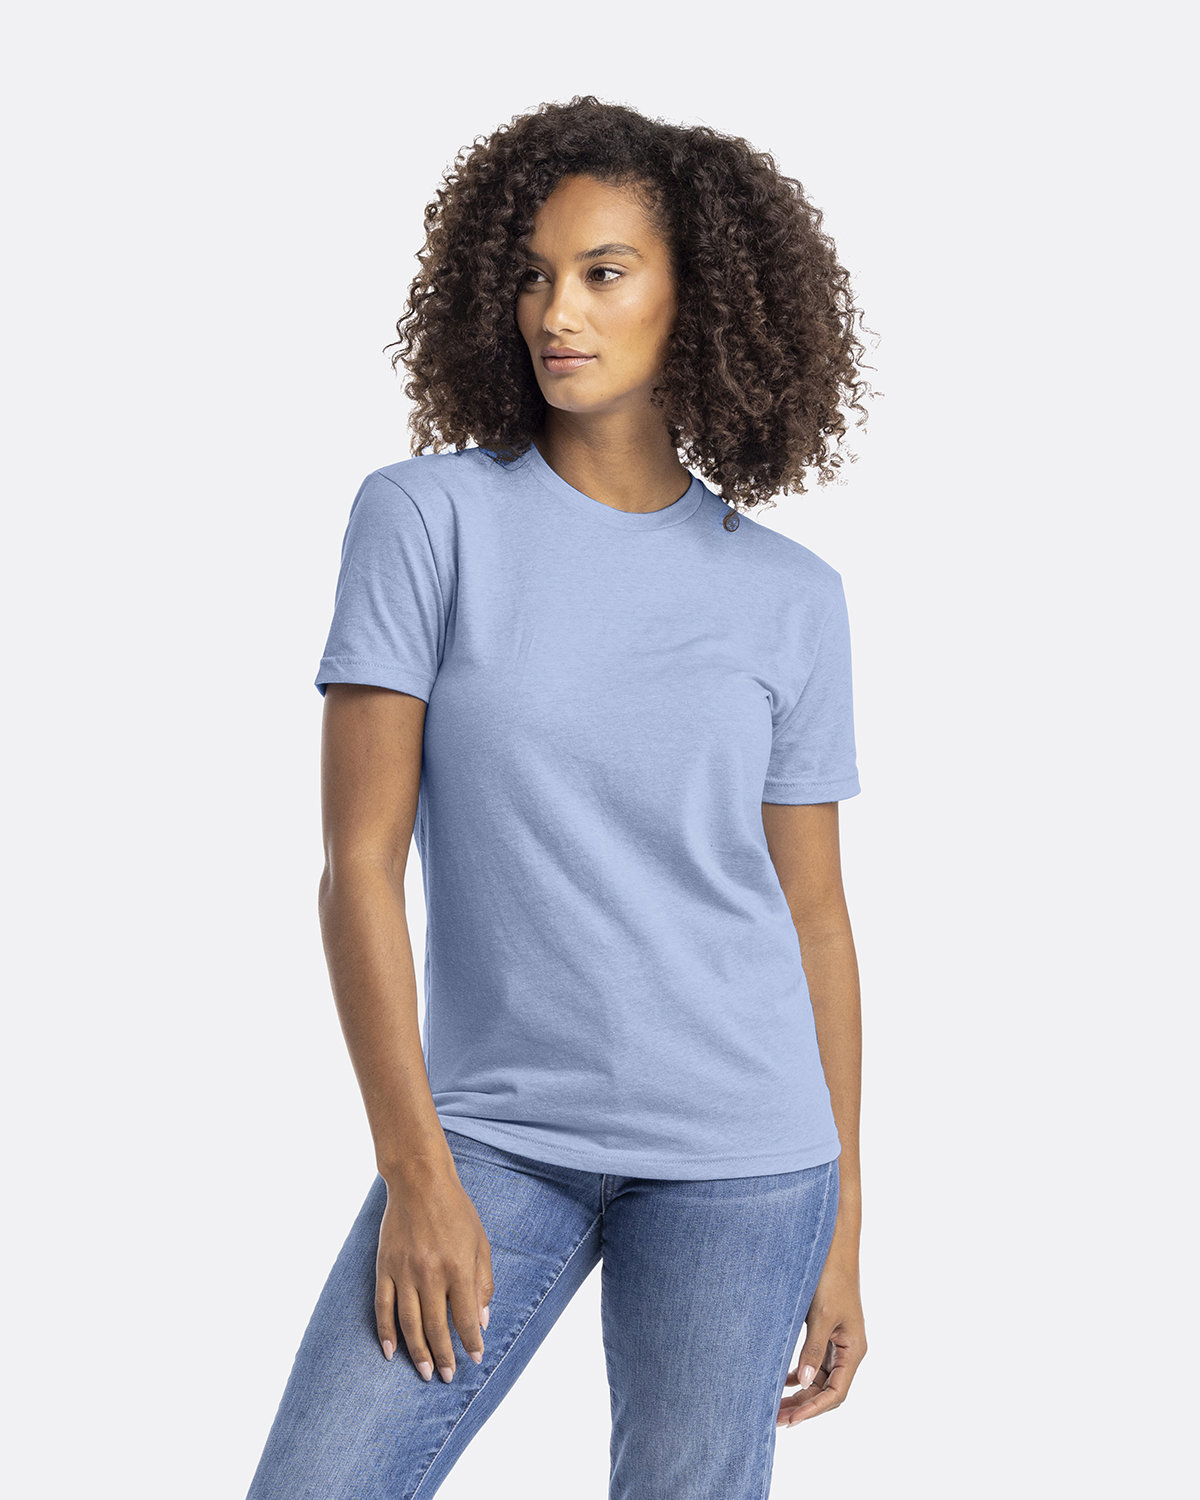 Next Level Unisex CVC Crewneck T-Shirt HTHR COLUM BLUE 